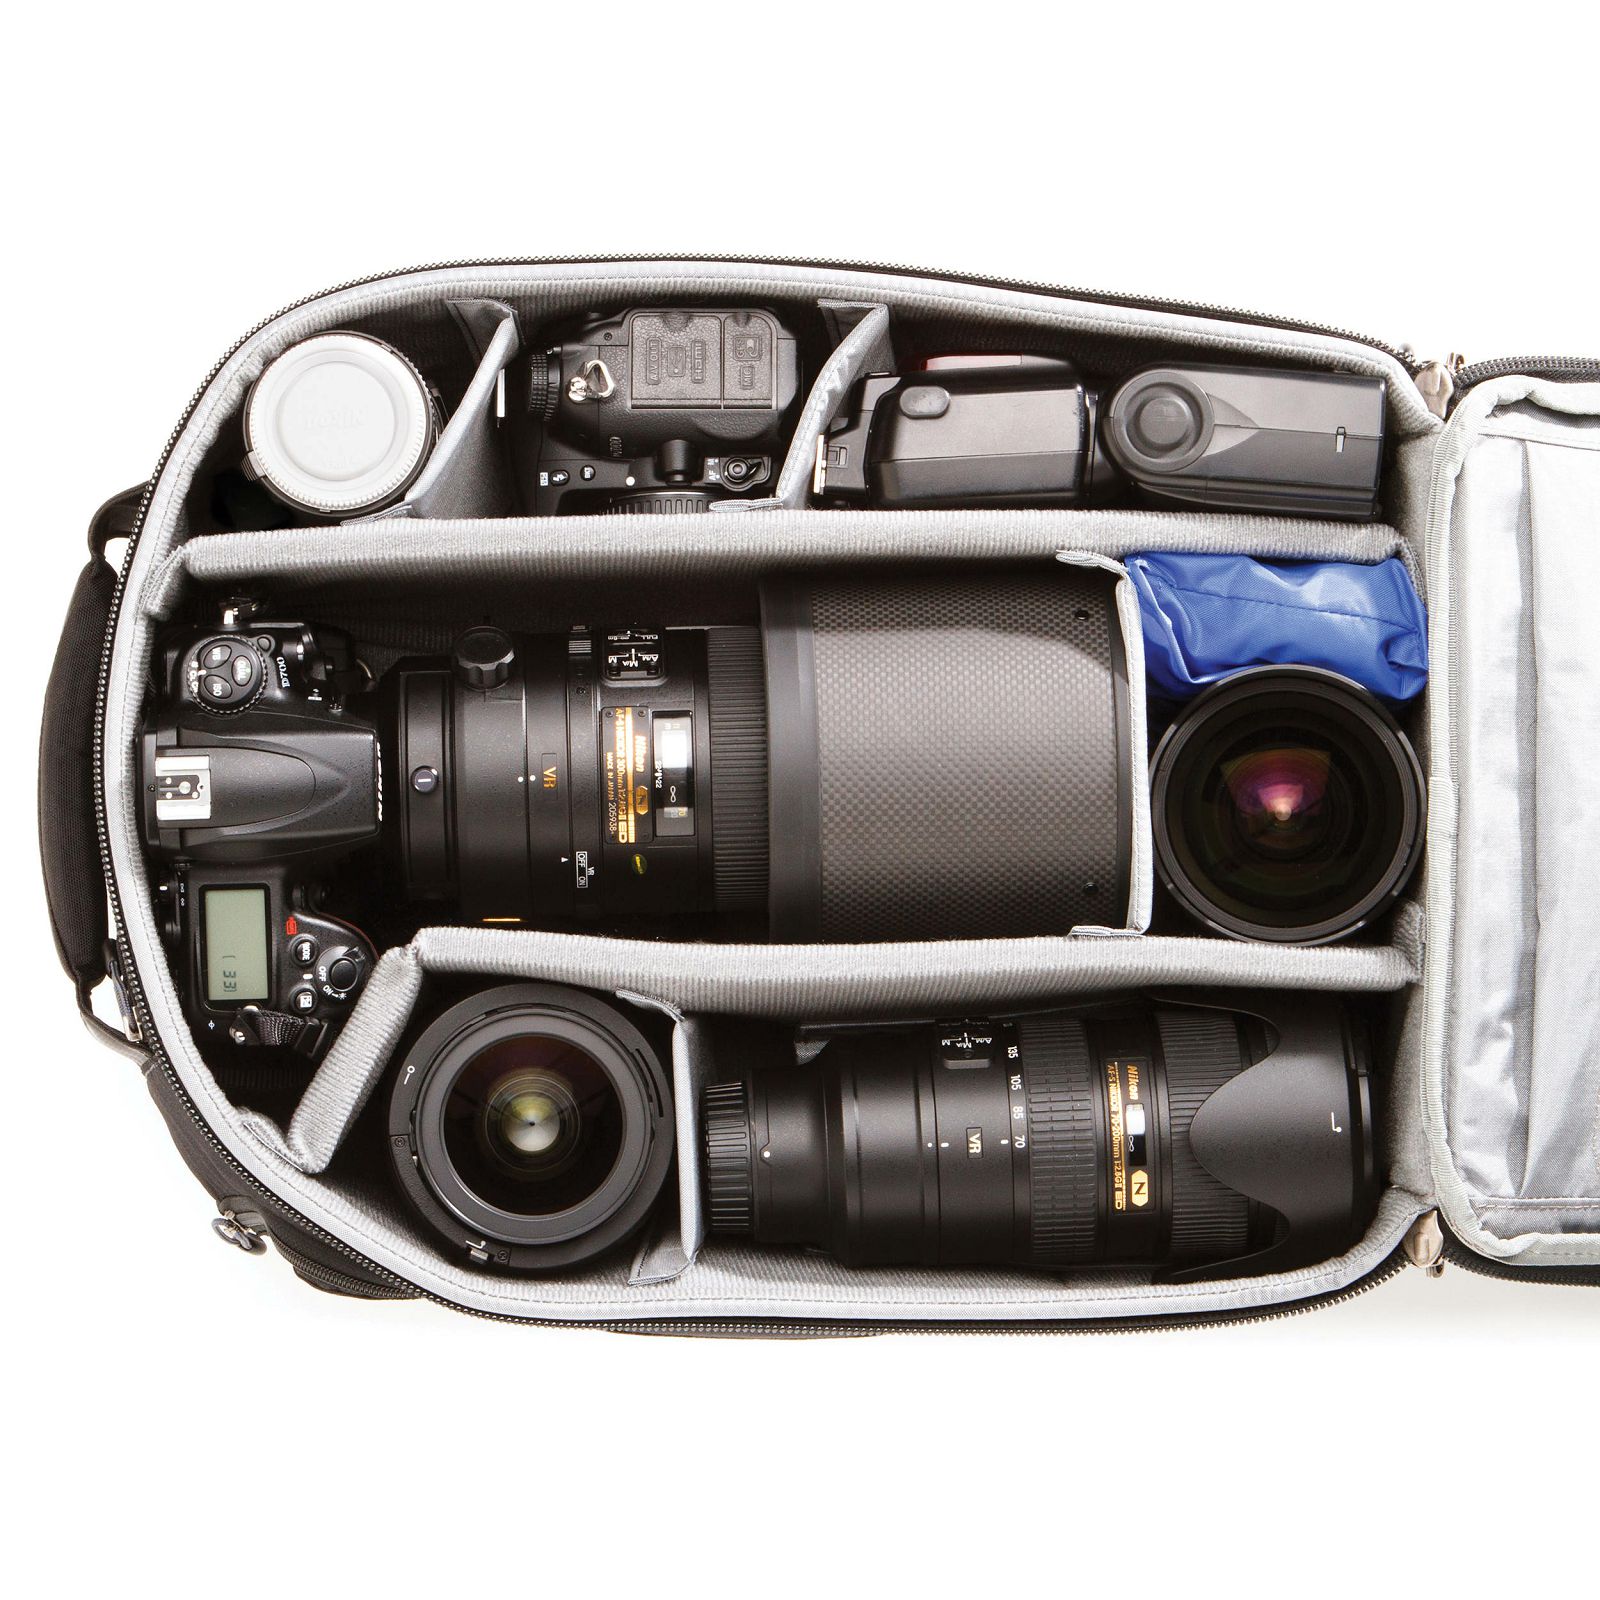 ThinkTank Airport Commuter Photo Backpack (Black) ruksak za DSLR fotoaparat, objektive i foto opremu (TT486)